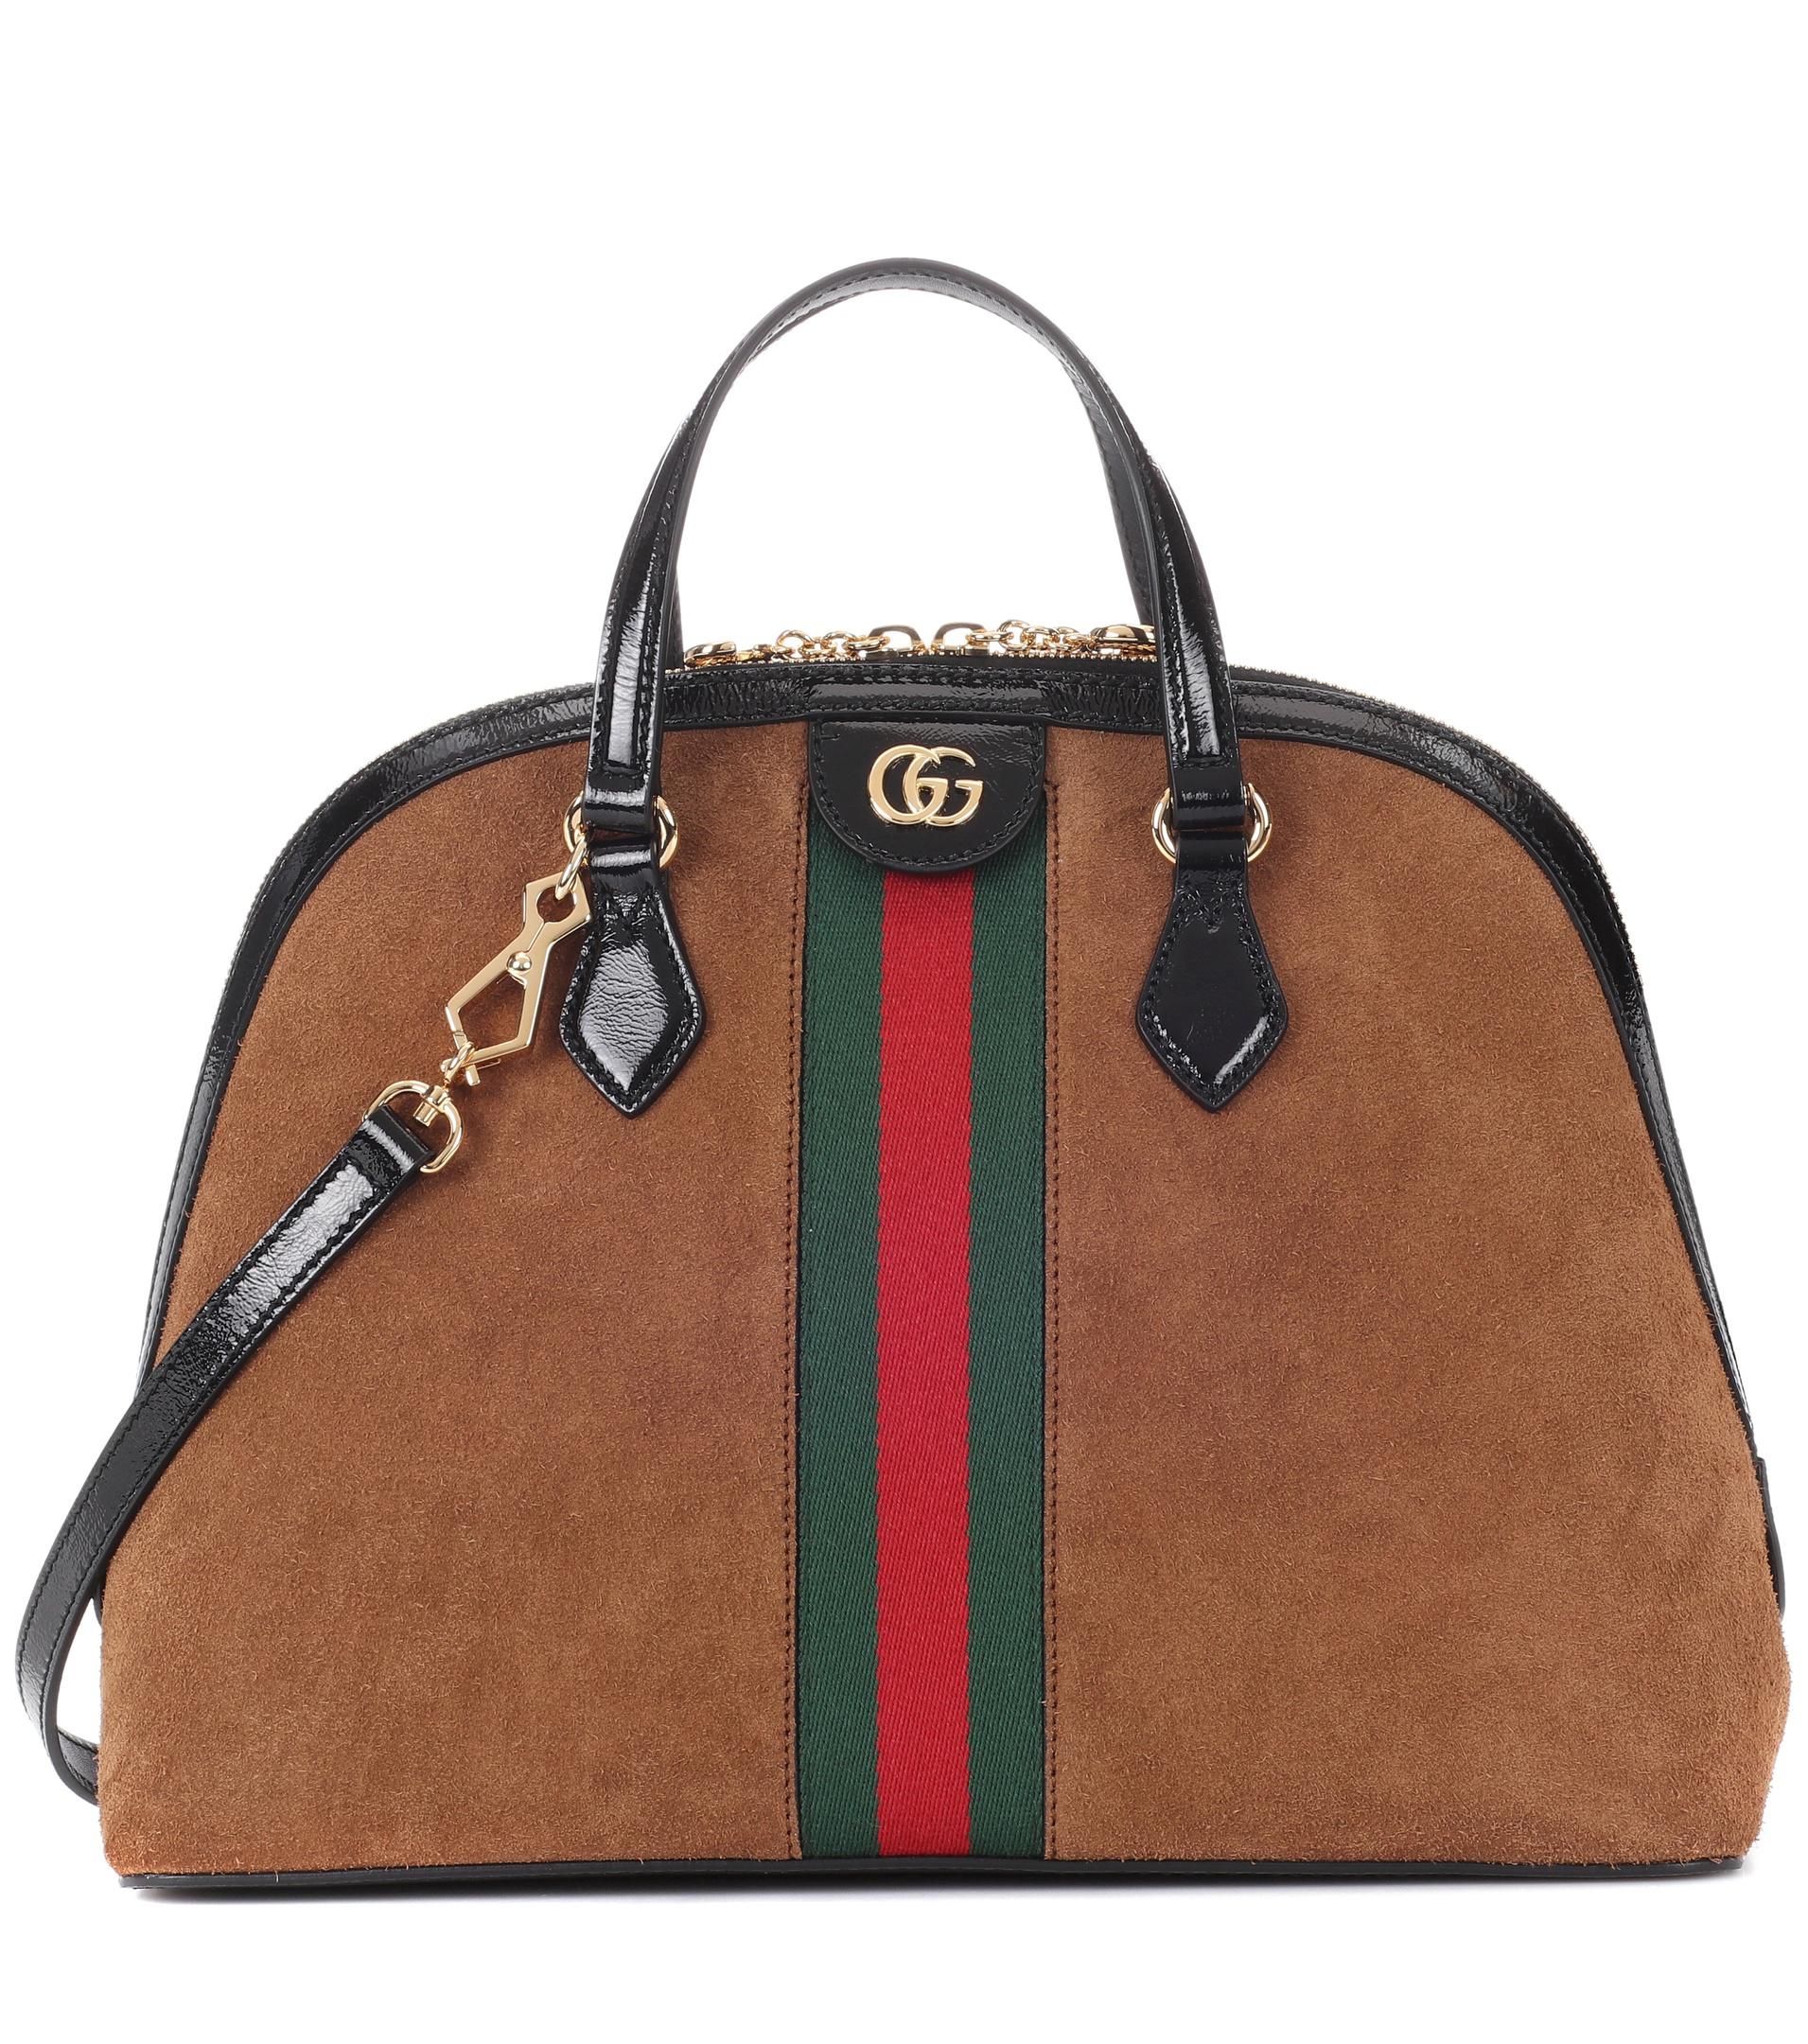 Gucci Ophidia Medium Suede Shoulder Bag in Brown | Lyst